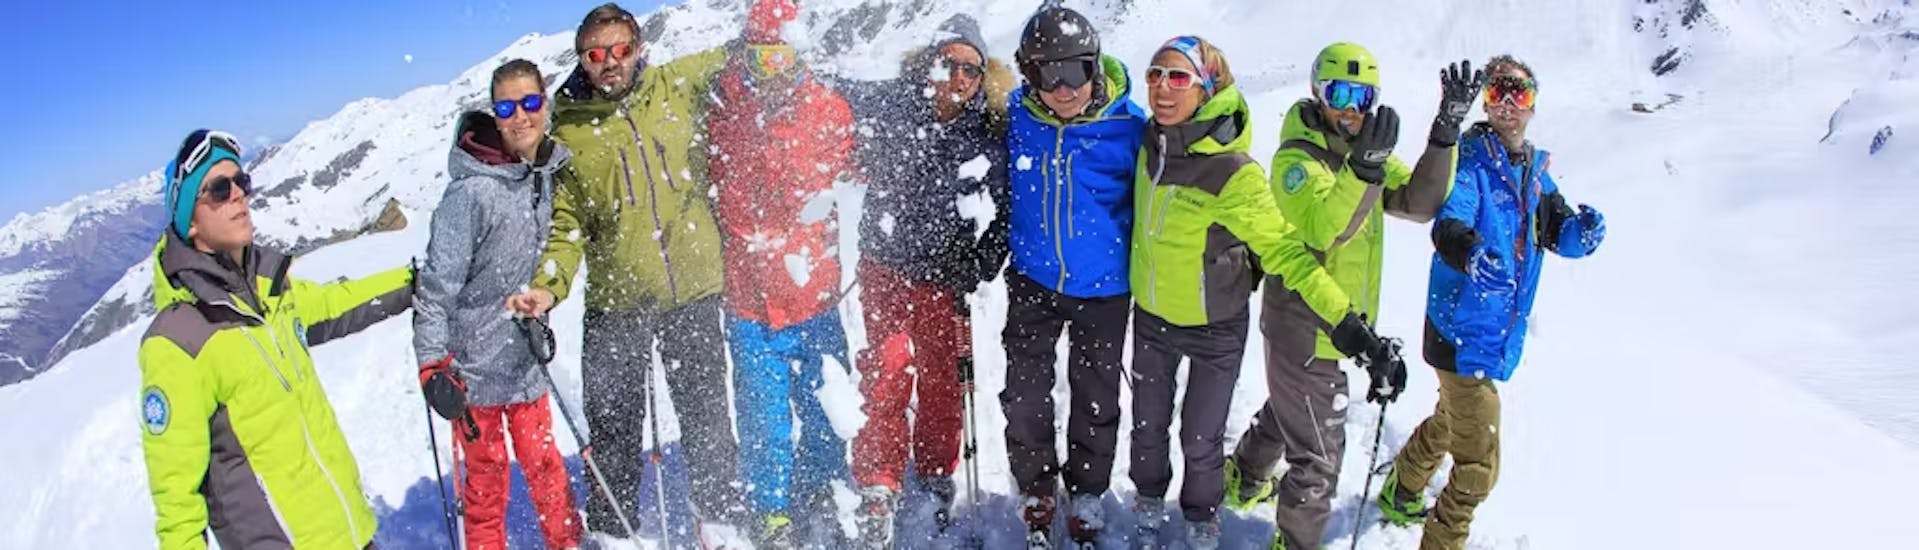 Clases de esquí para adultos principiantes (a partir de 14 años) - Máx. 4 por grupo.